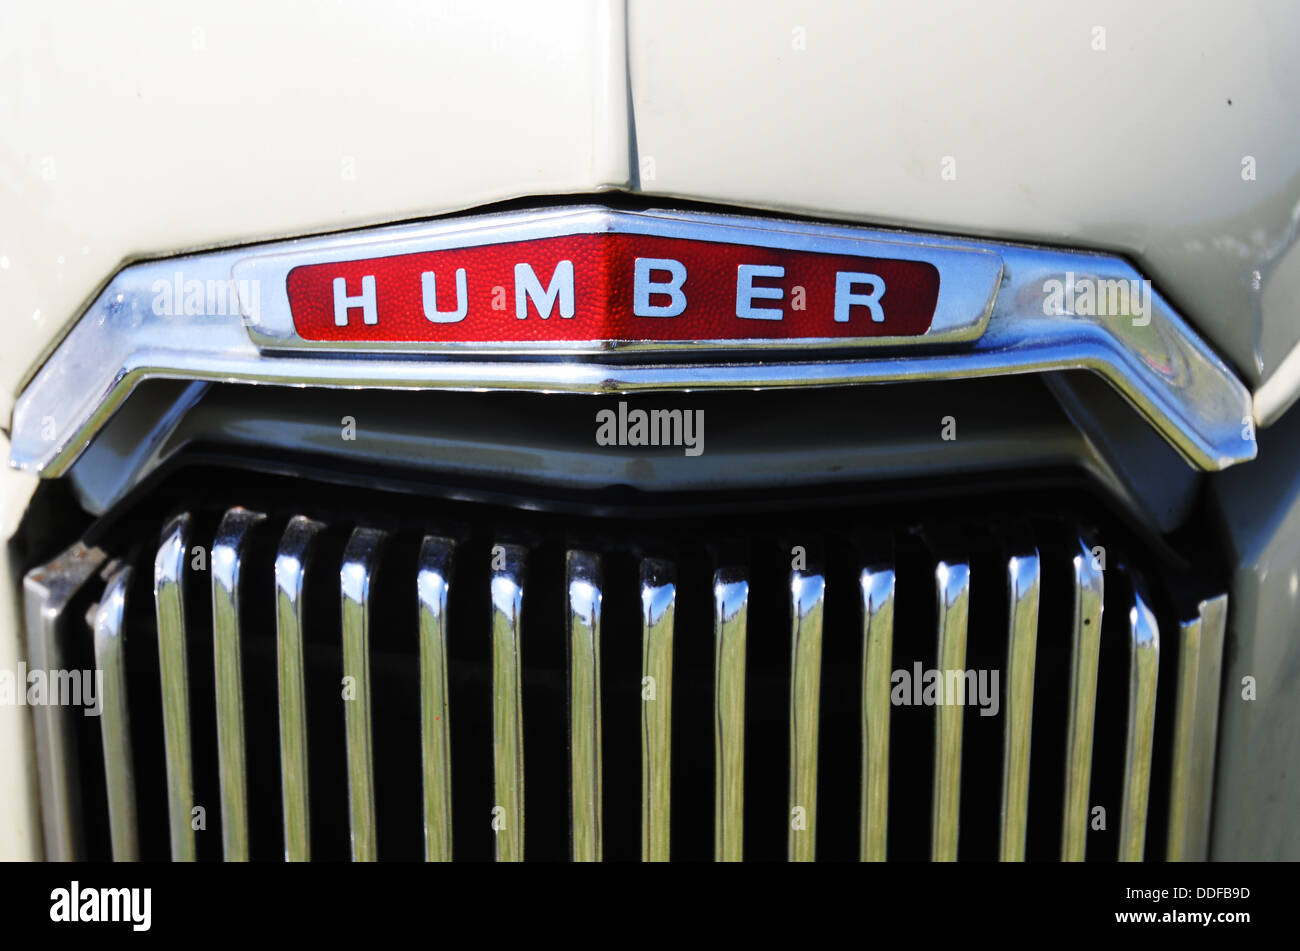 Humber klassiker -Fotos und -Bildmaterial in hoher Auflösung – Alamy